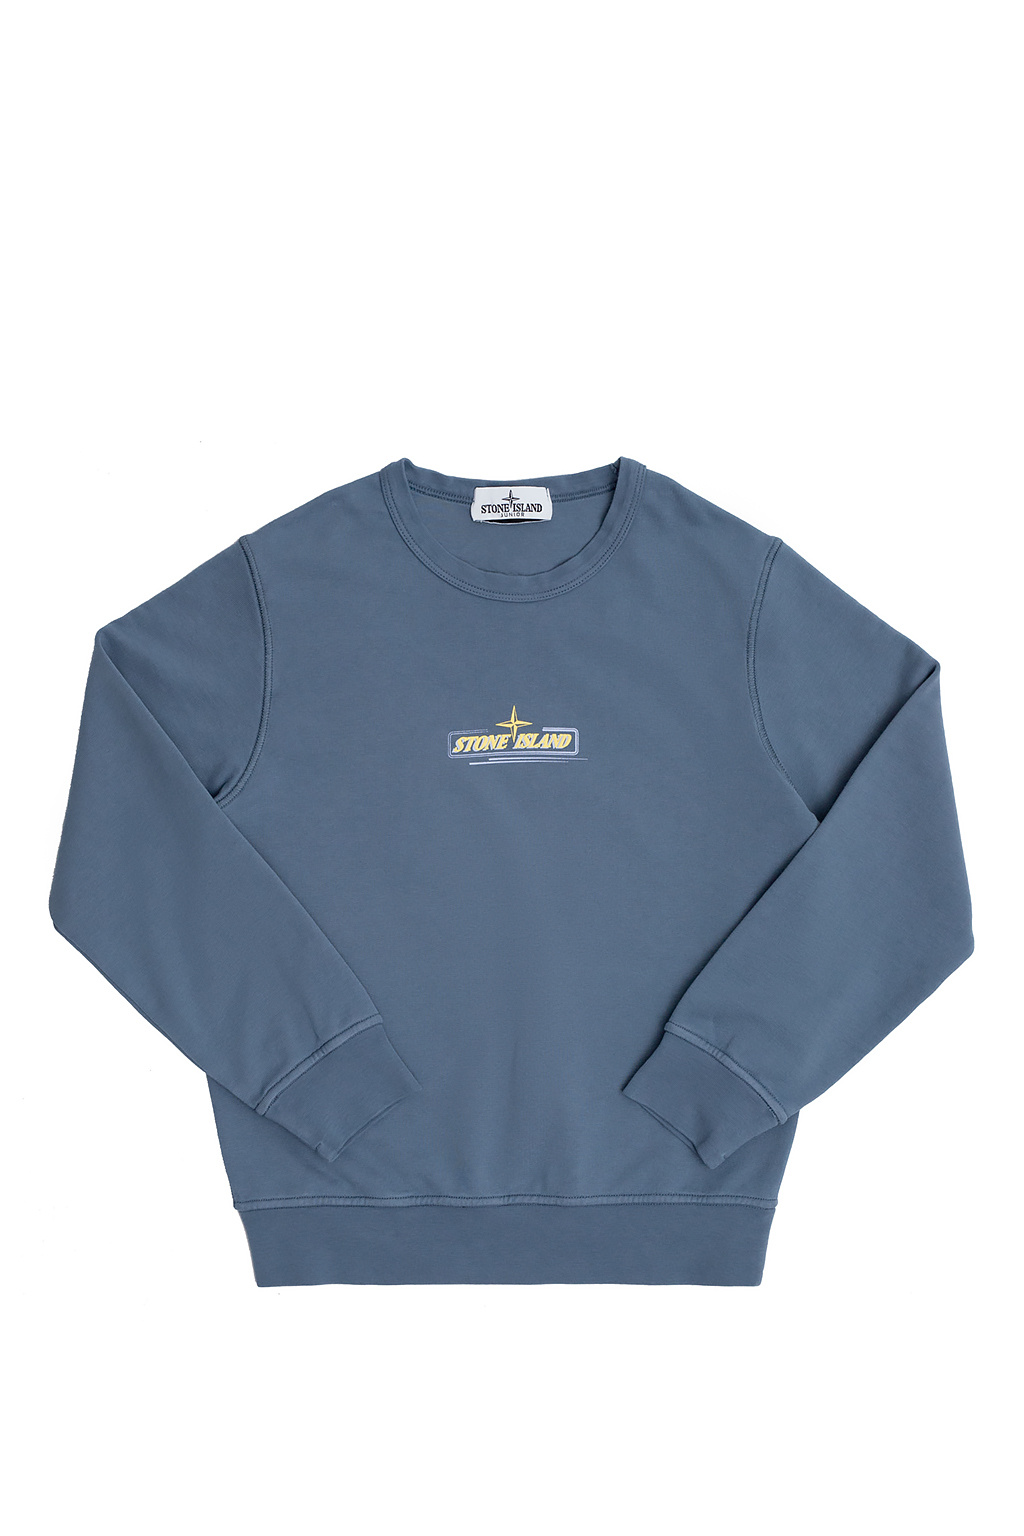 Reclaimed Vintage inspired Saum hoodie in light blue silhouette sweatshirt with Saum